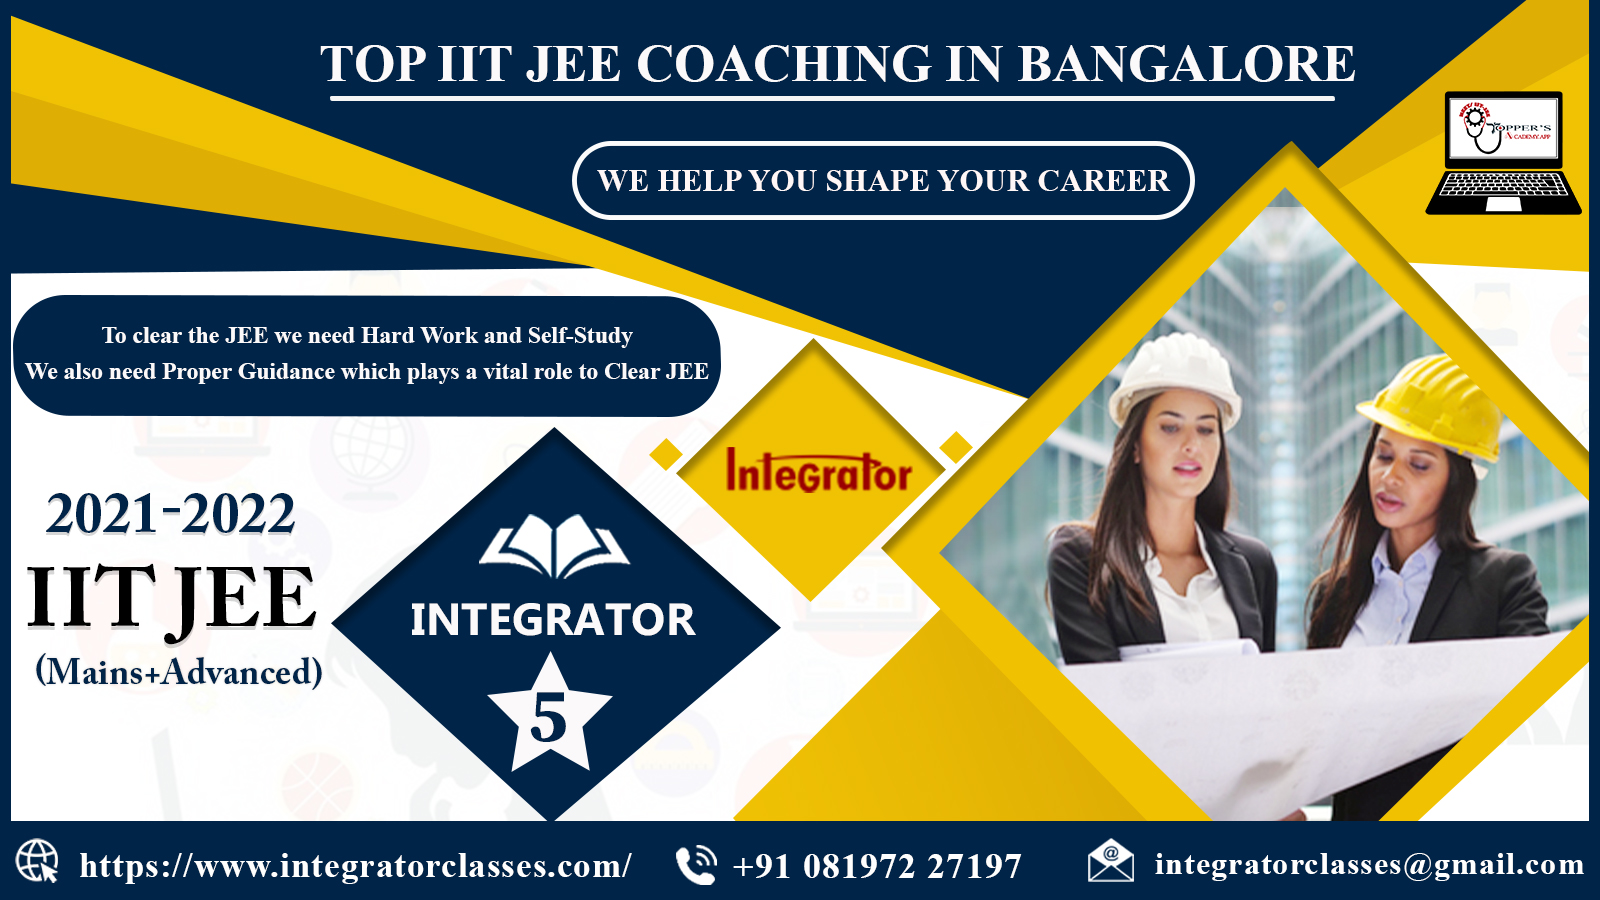 Best IIT JEE Coaching in bangalore